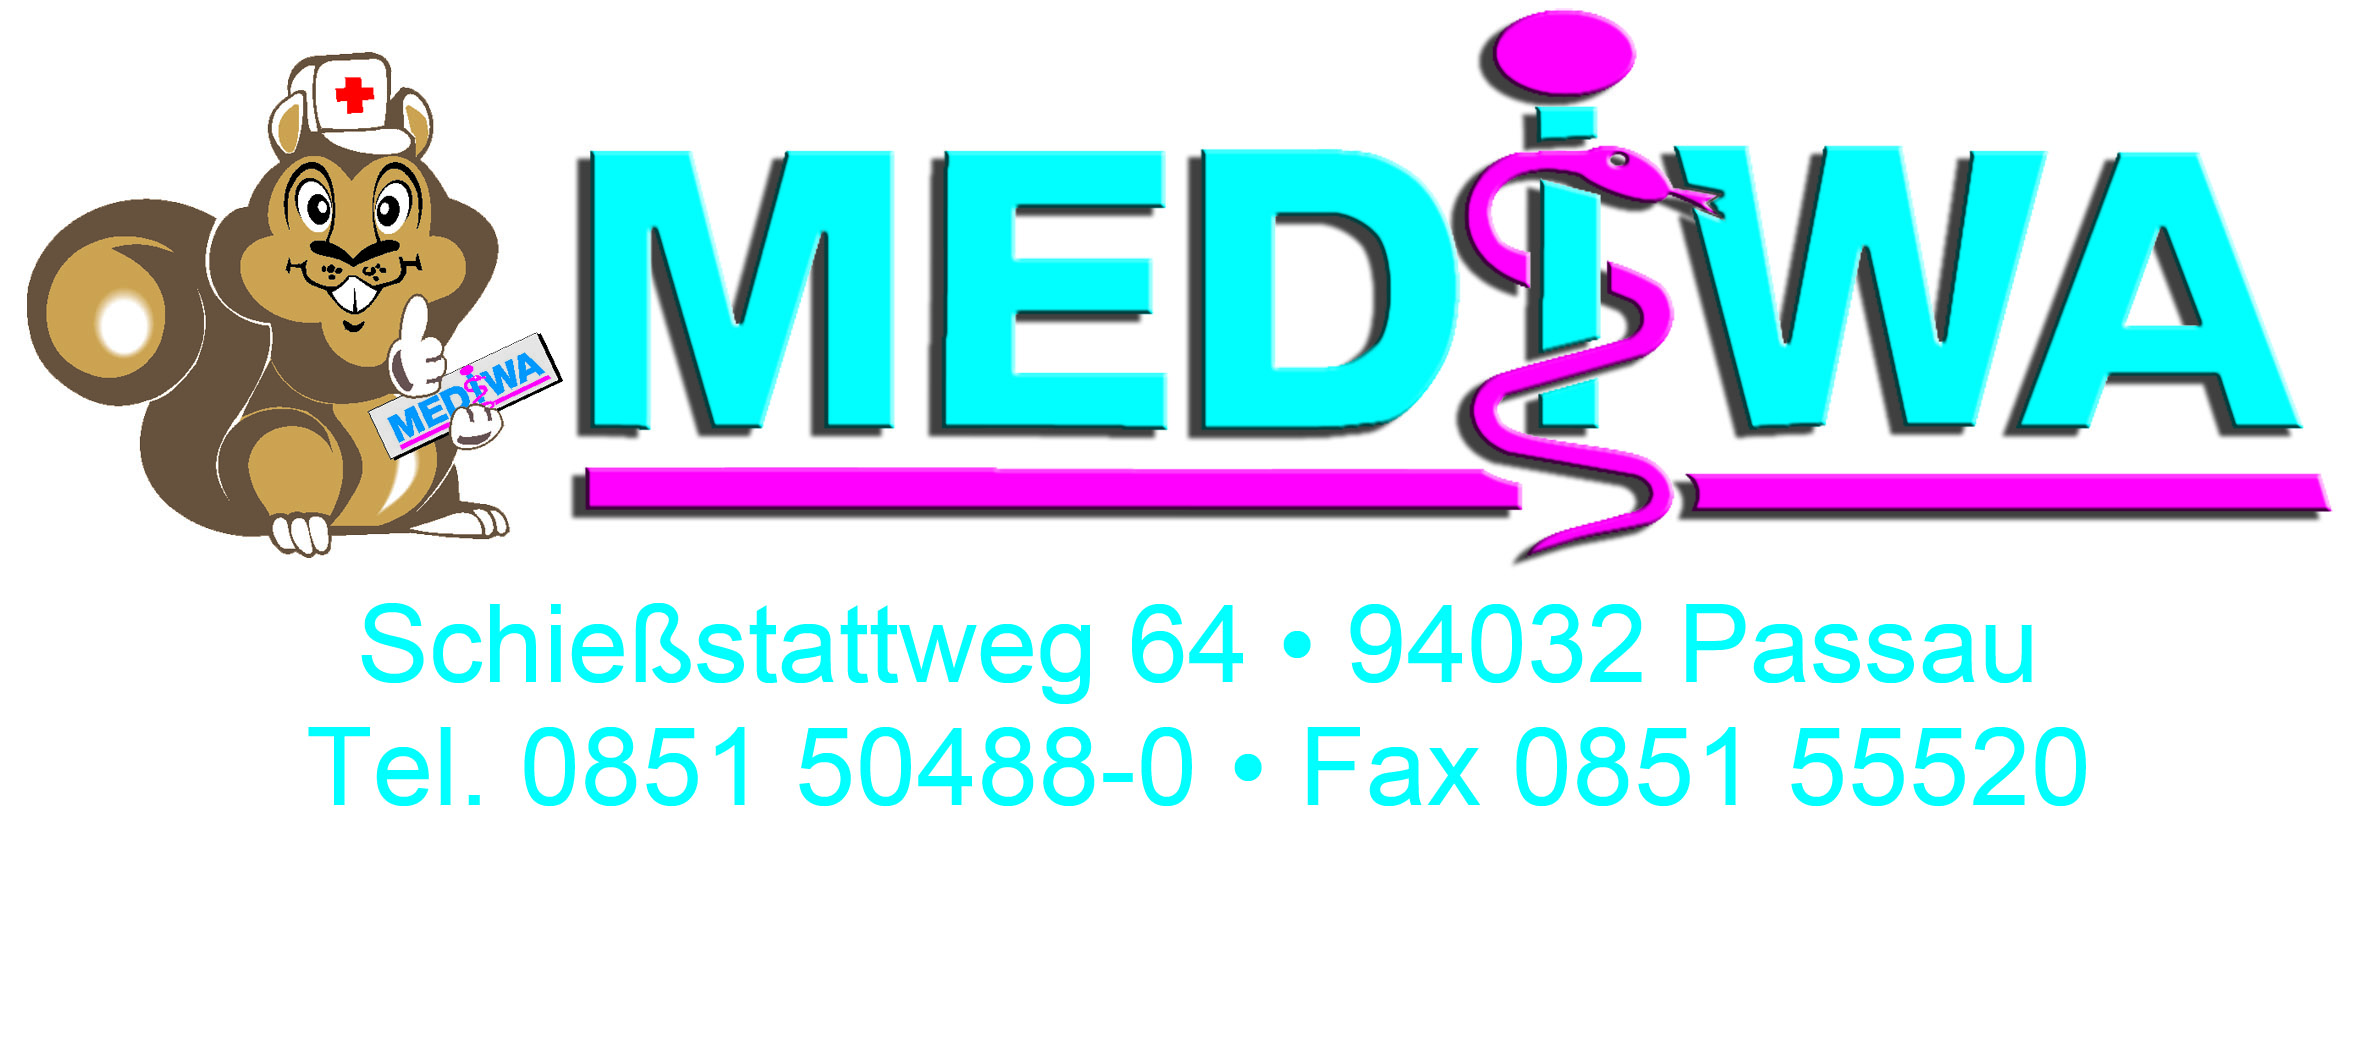 MEDIWA GmbH